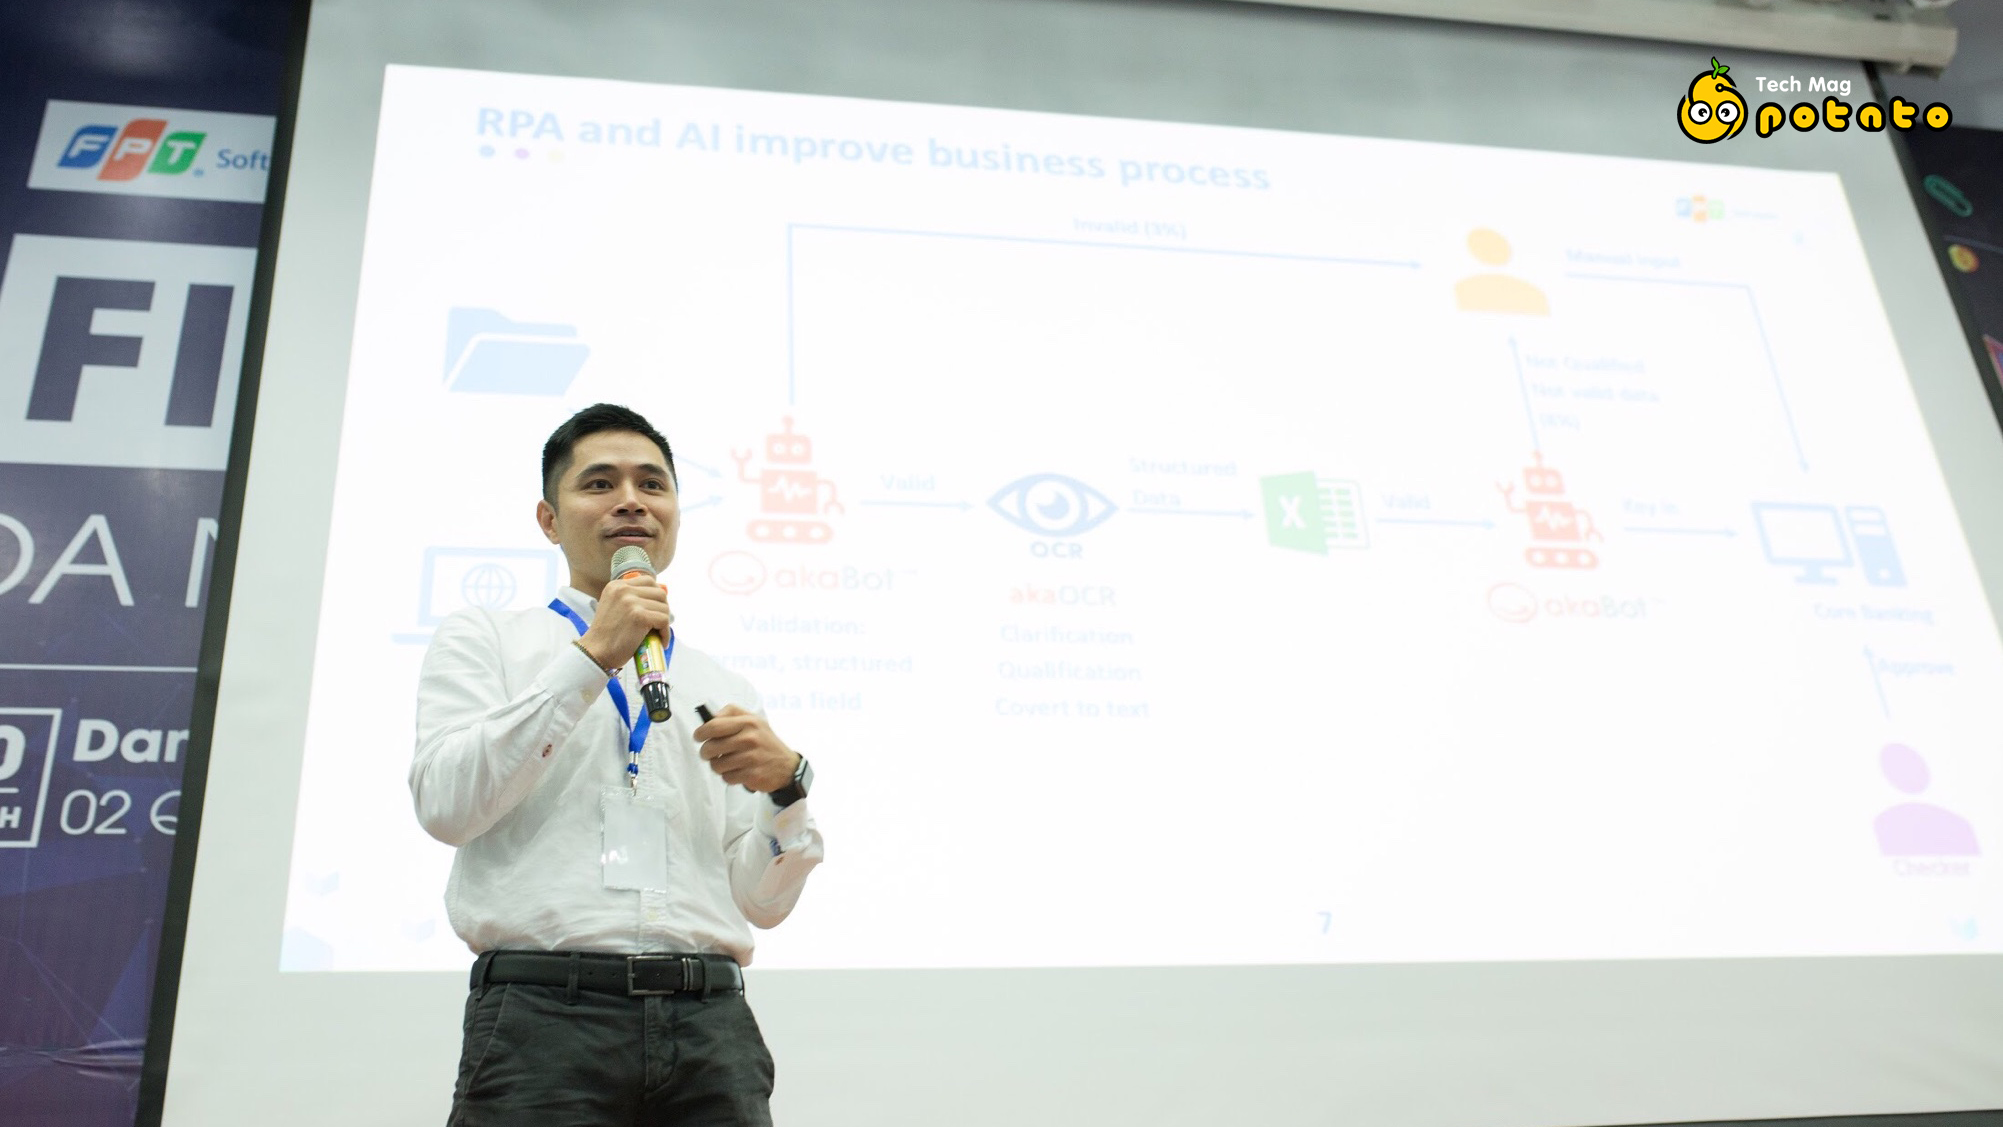 akaBot continued impressing audiences at Da Nang Fintech day 2019